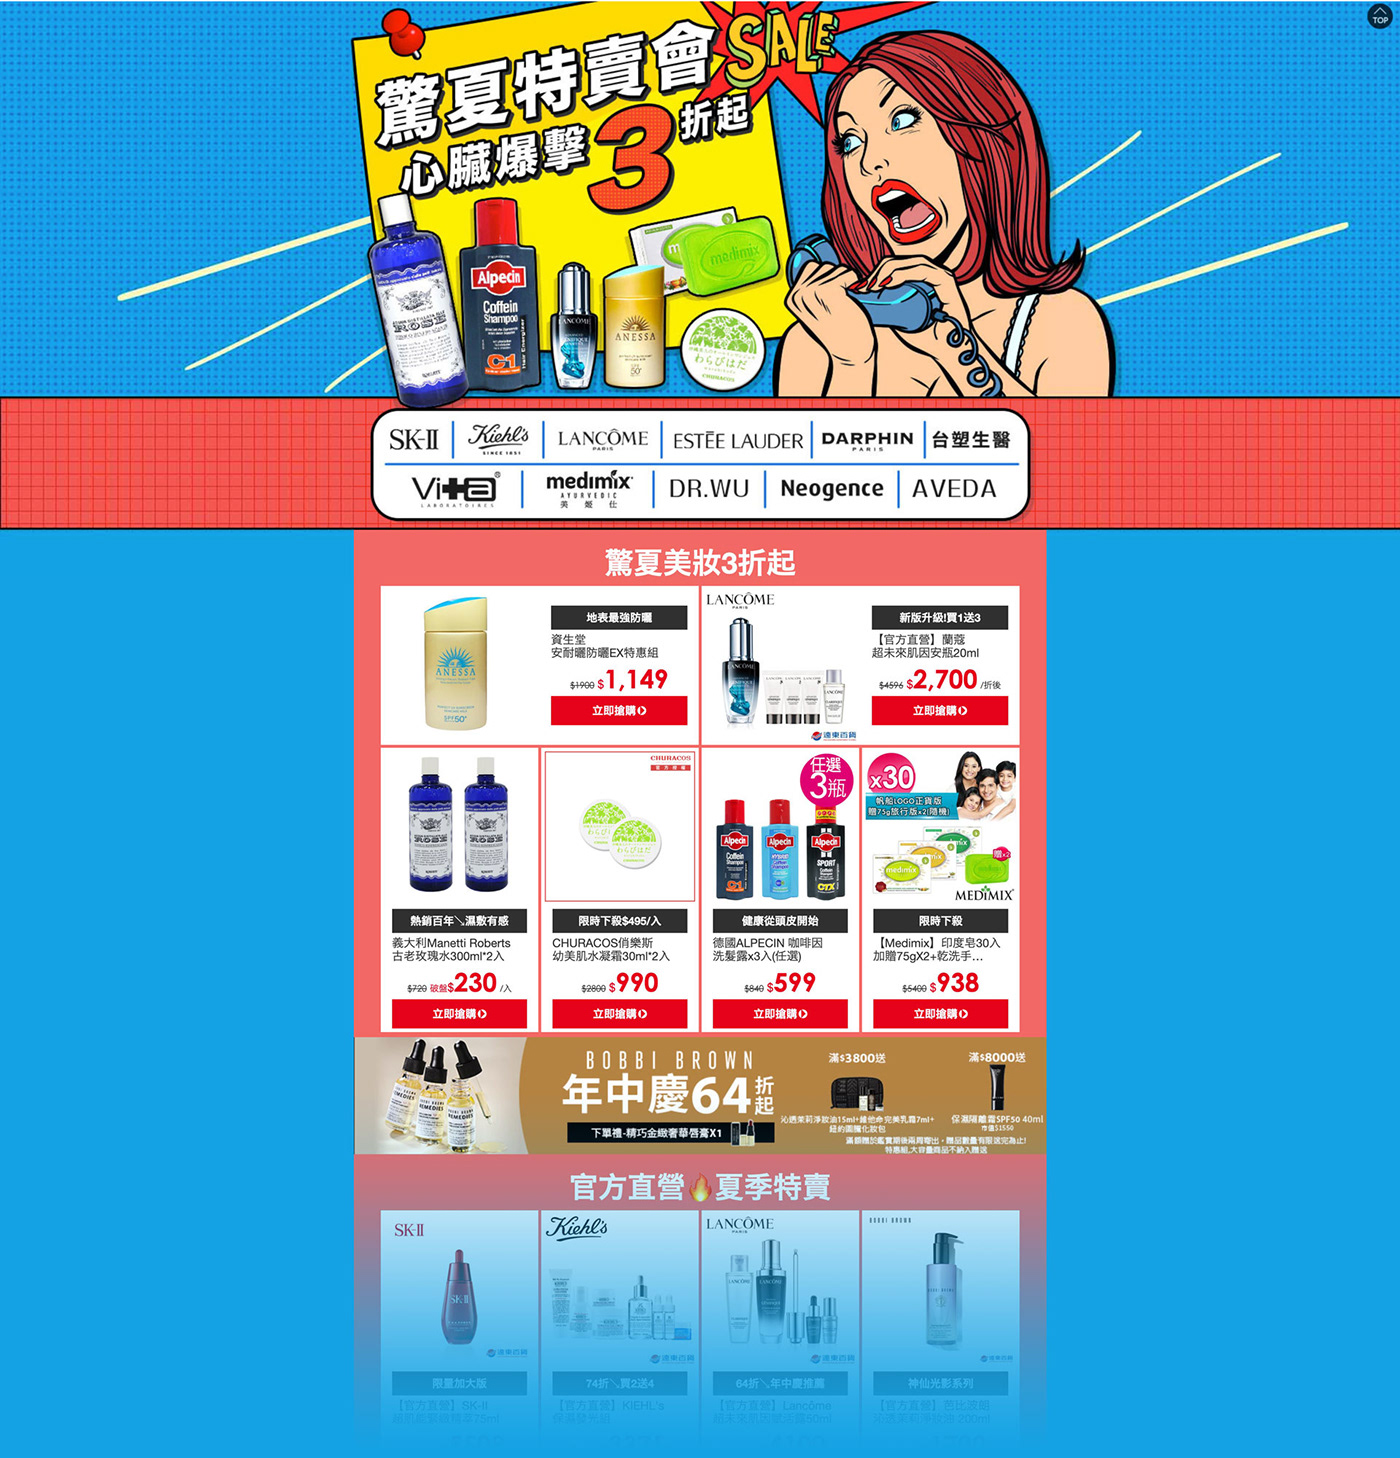 e-commerce Advertising  Edm Design landing page Web Design  visual design graphic design  branding  marketing   cosmetics